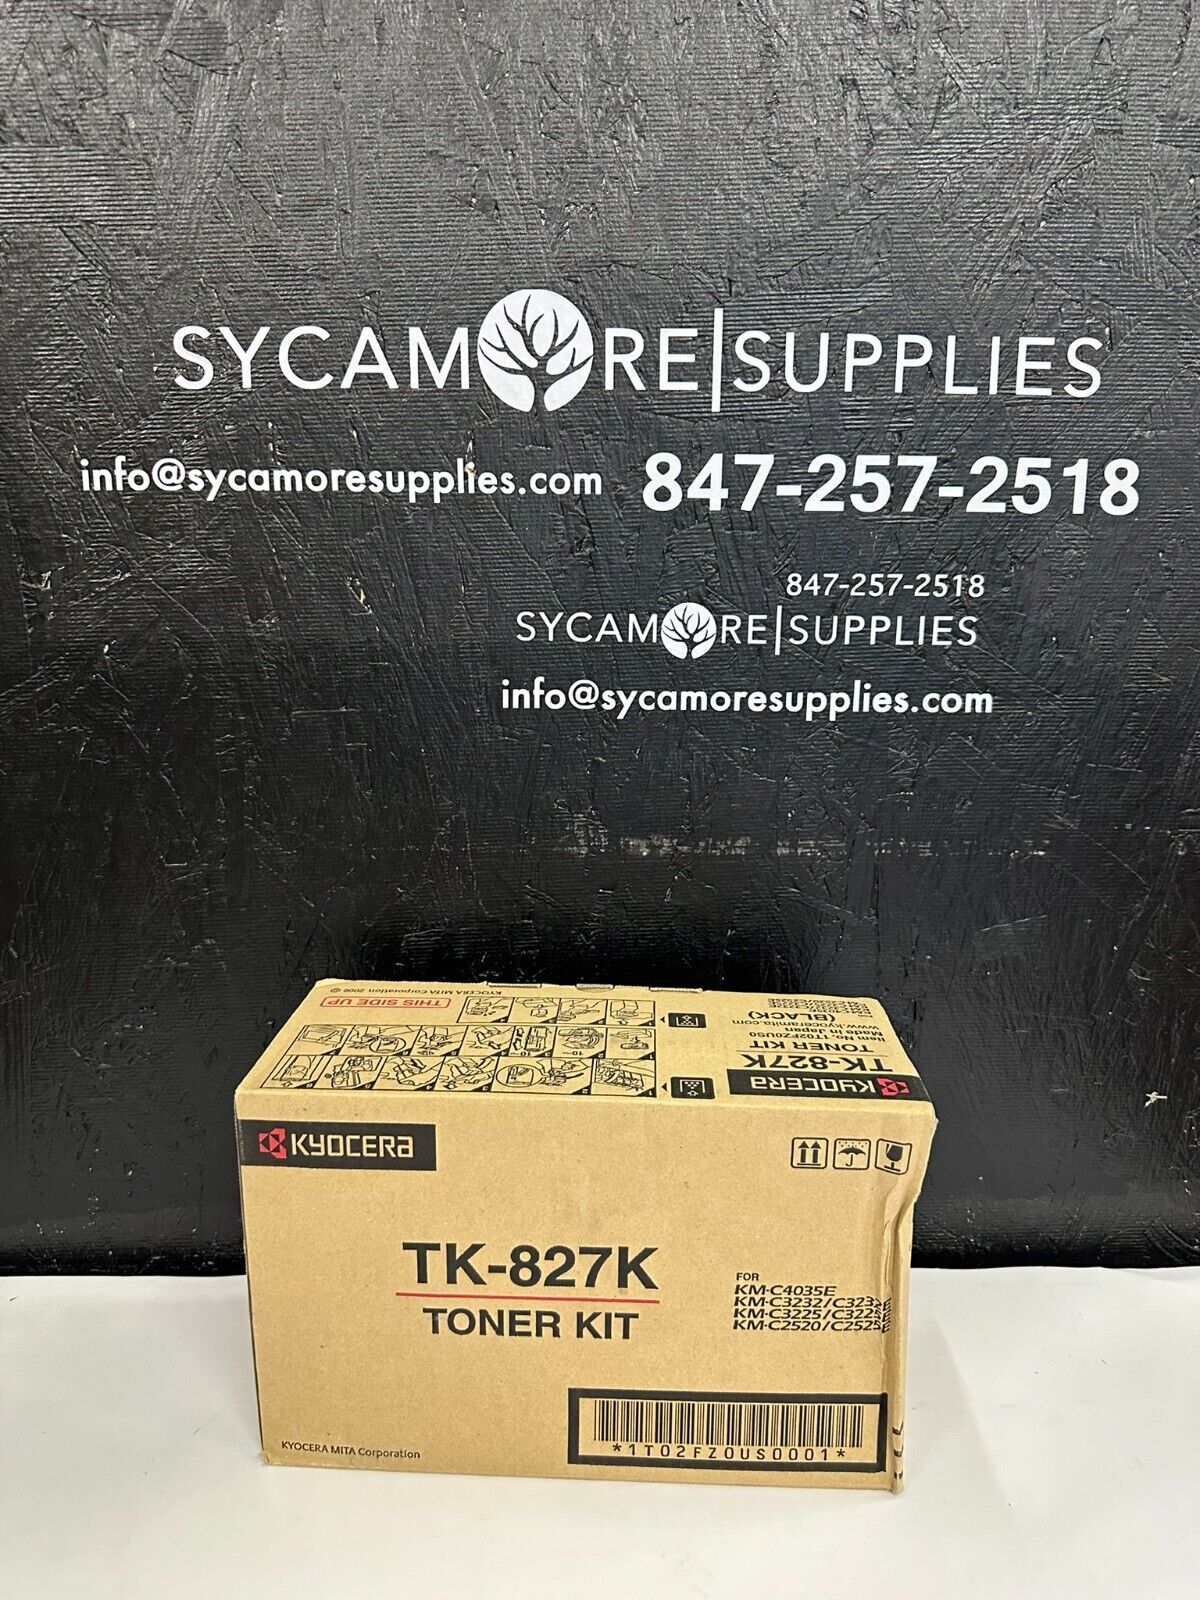 Genuine Kyocera TK-827K Black Toner Cartridge KM-C4035E/C3232/C3225